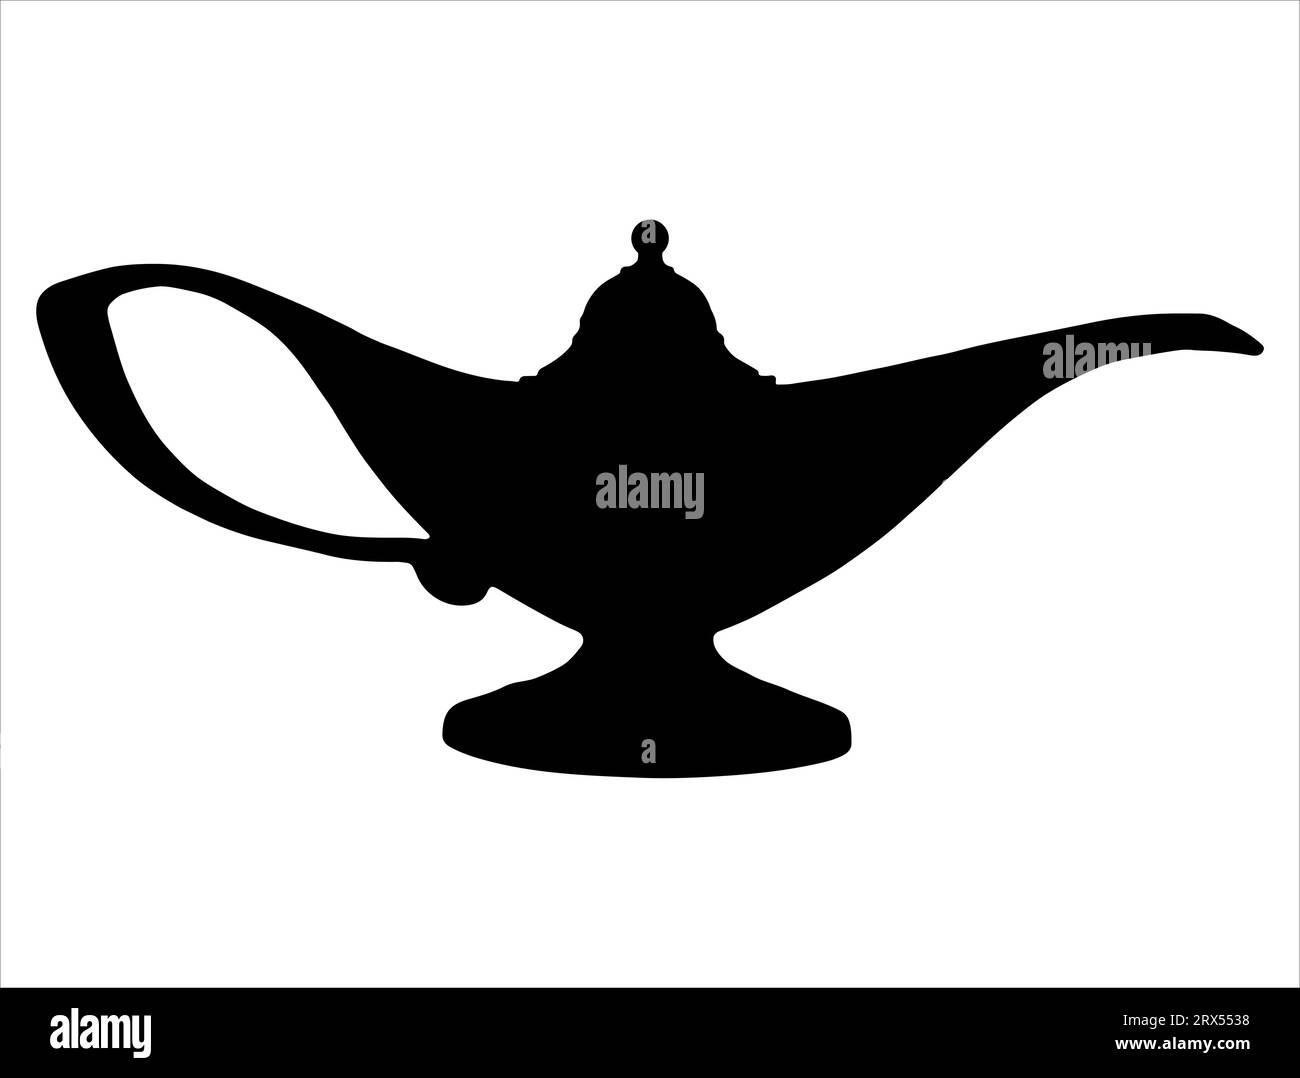 Genie lamp silhouette vector art white background Stock Vector Image ...